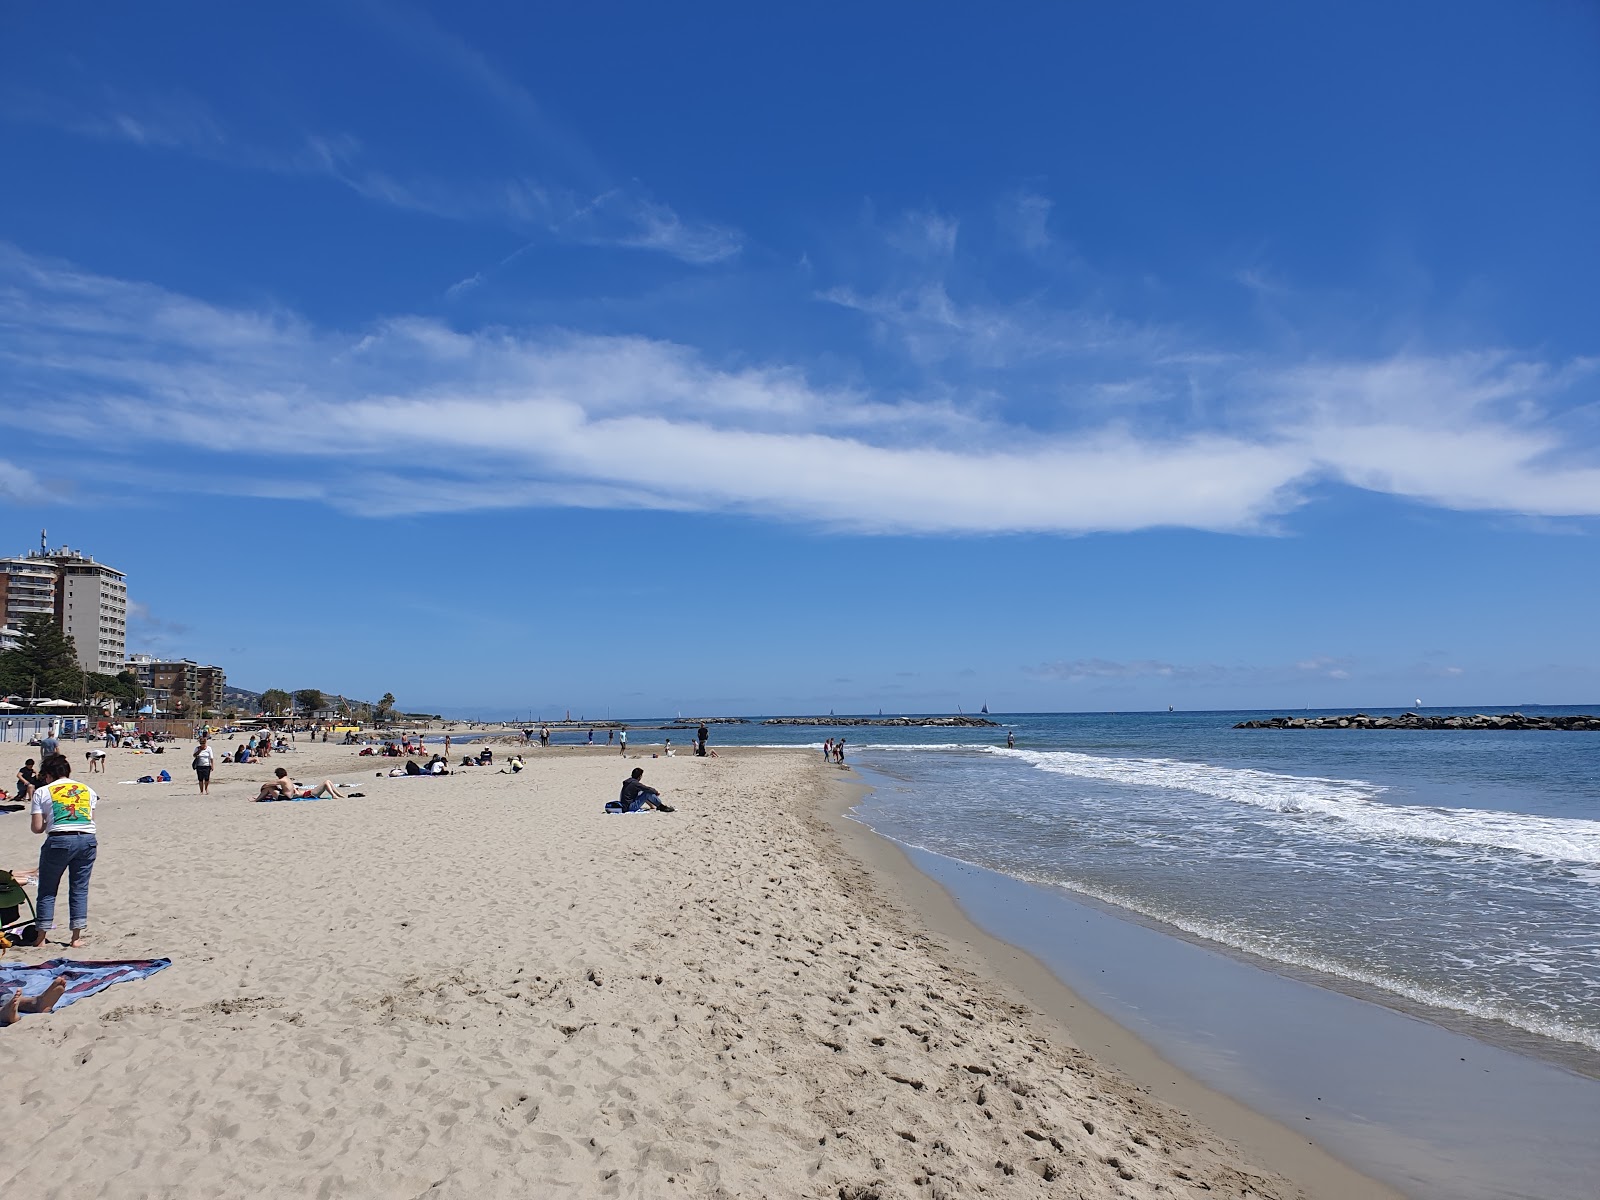 Foto von Spiaggia Arma di Taggia mit brauner sand Oberfläche